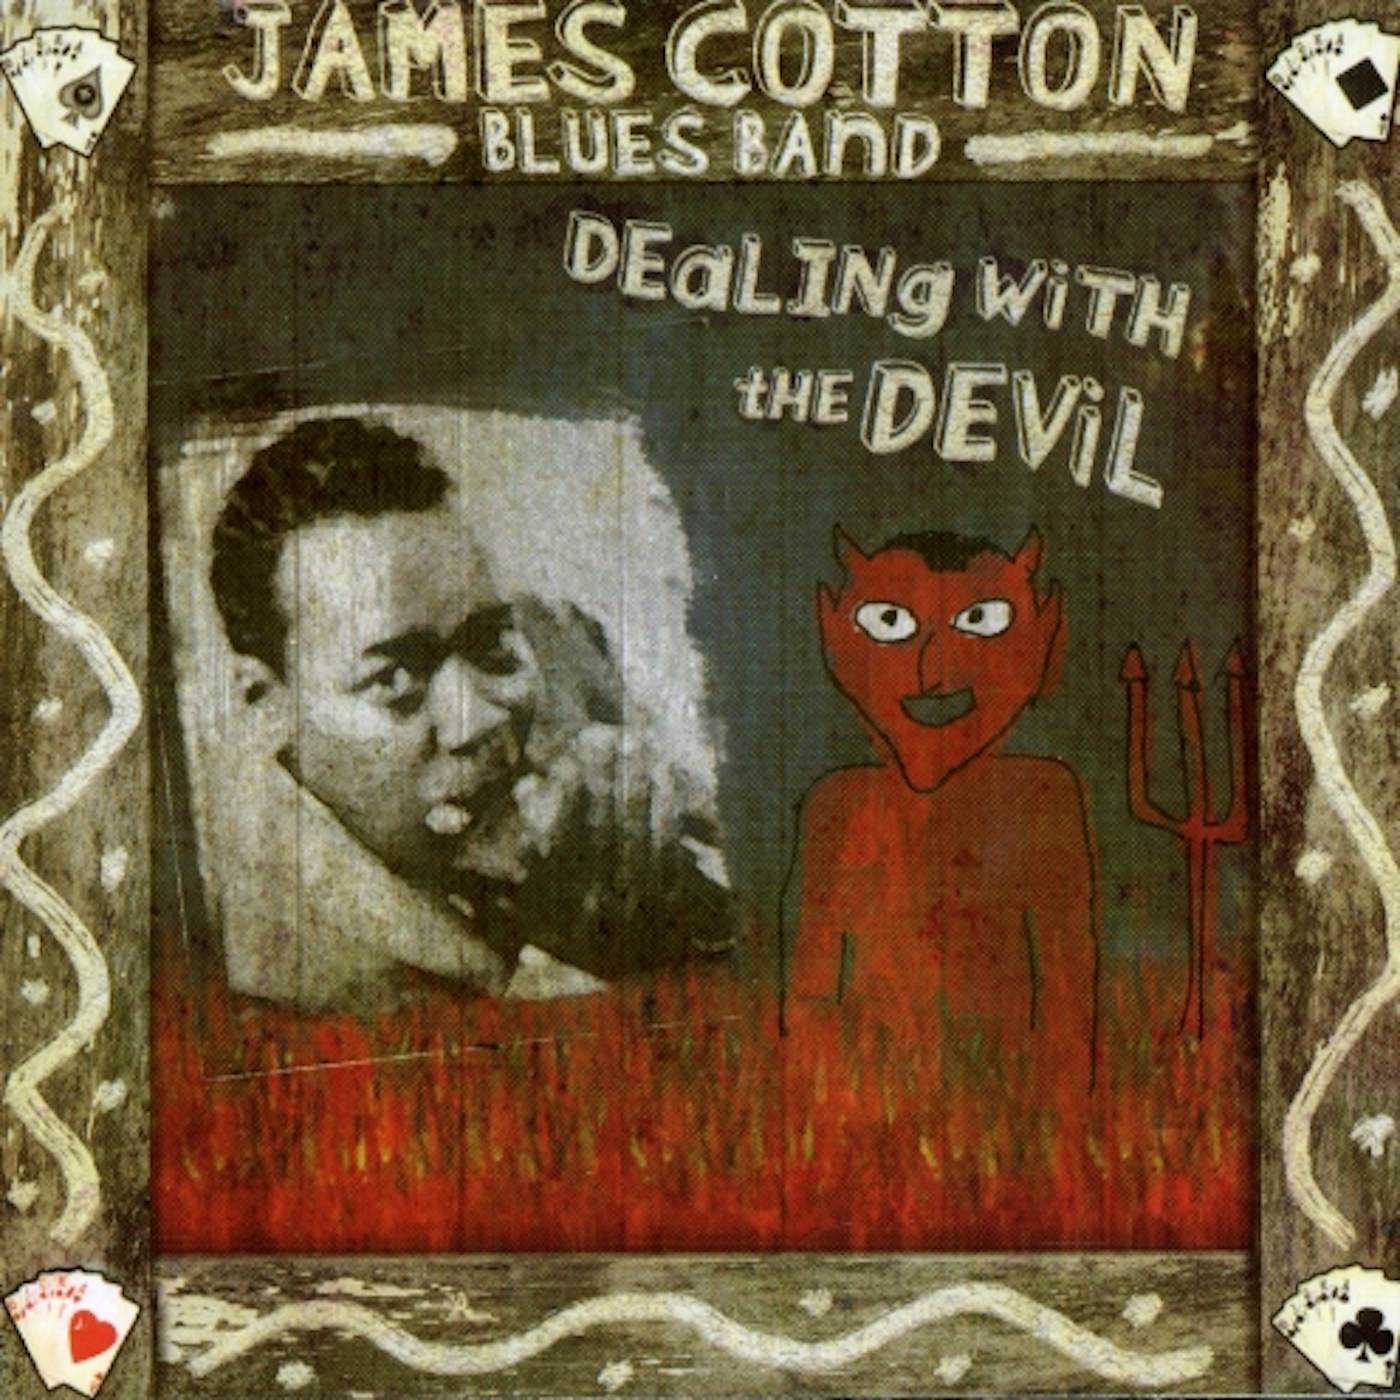 James Cotton DEALIN WITH THE DEVIL CD